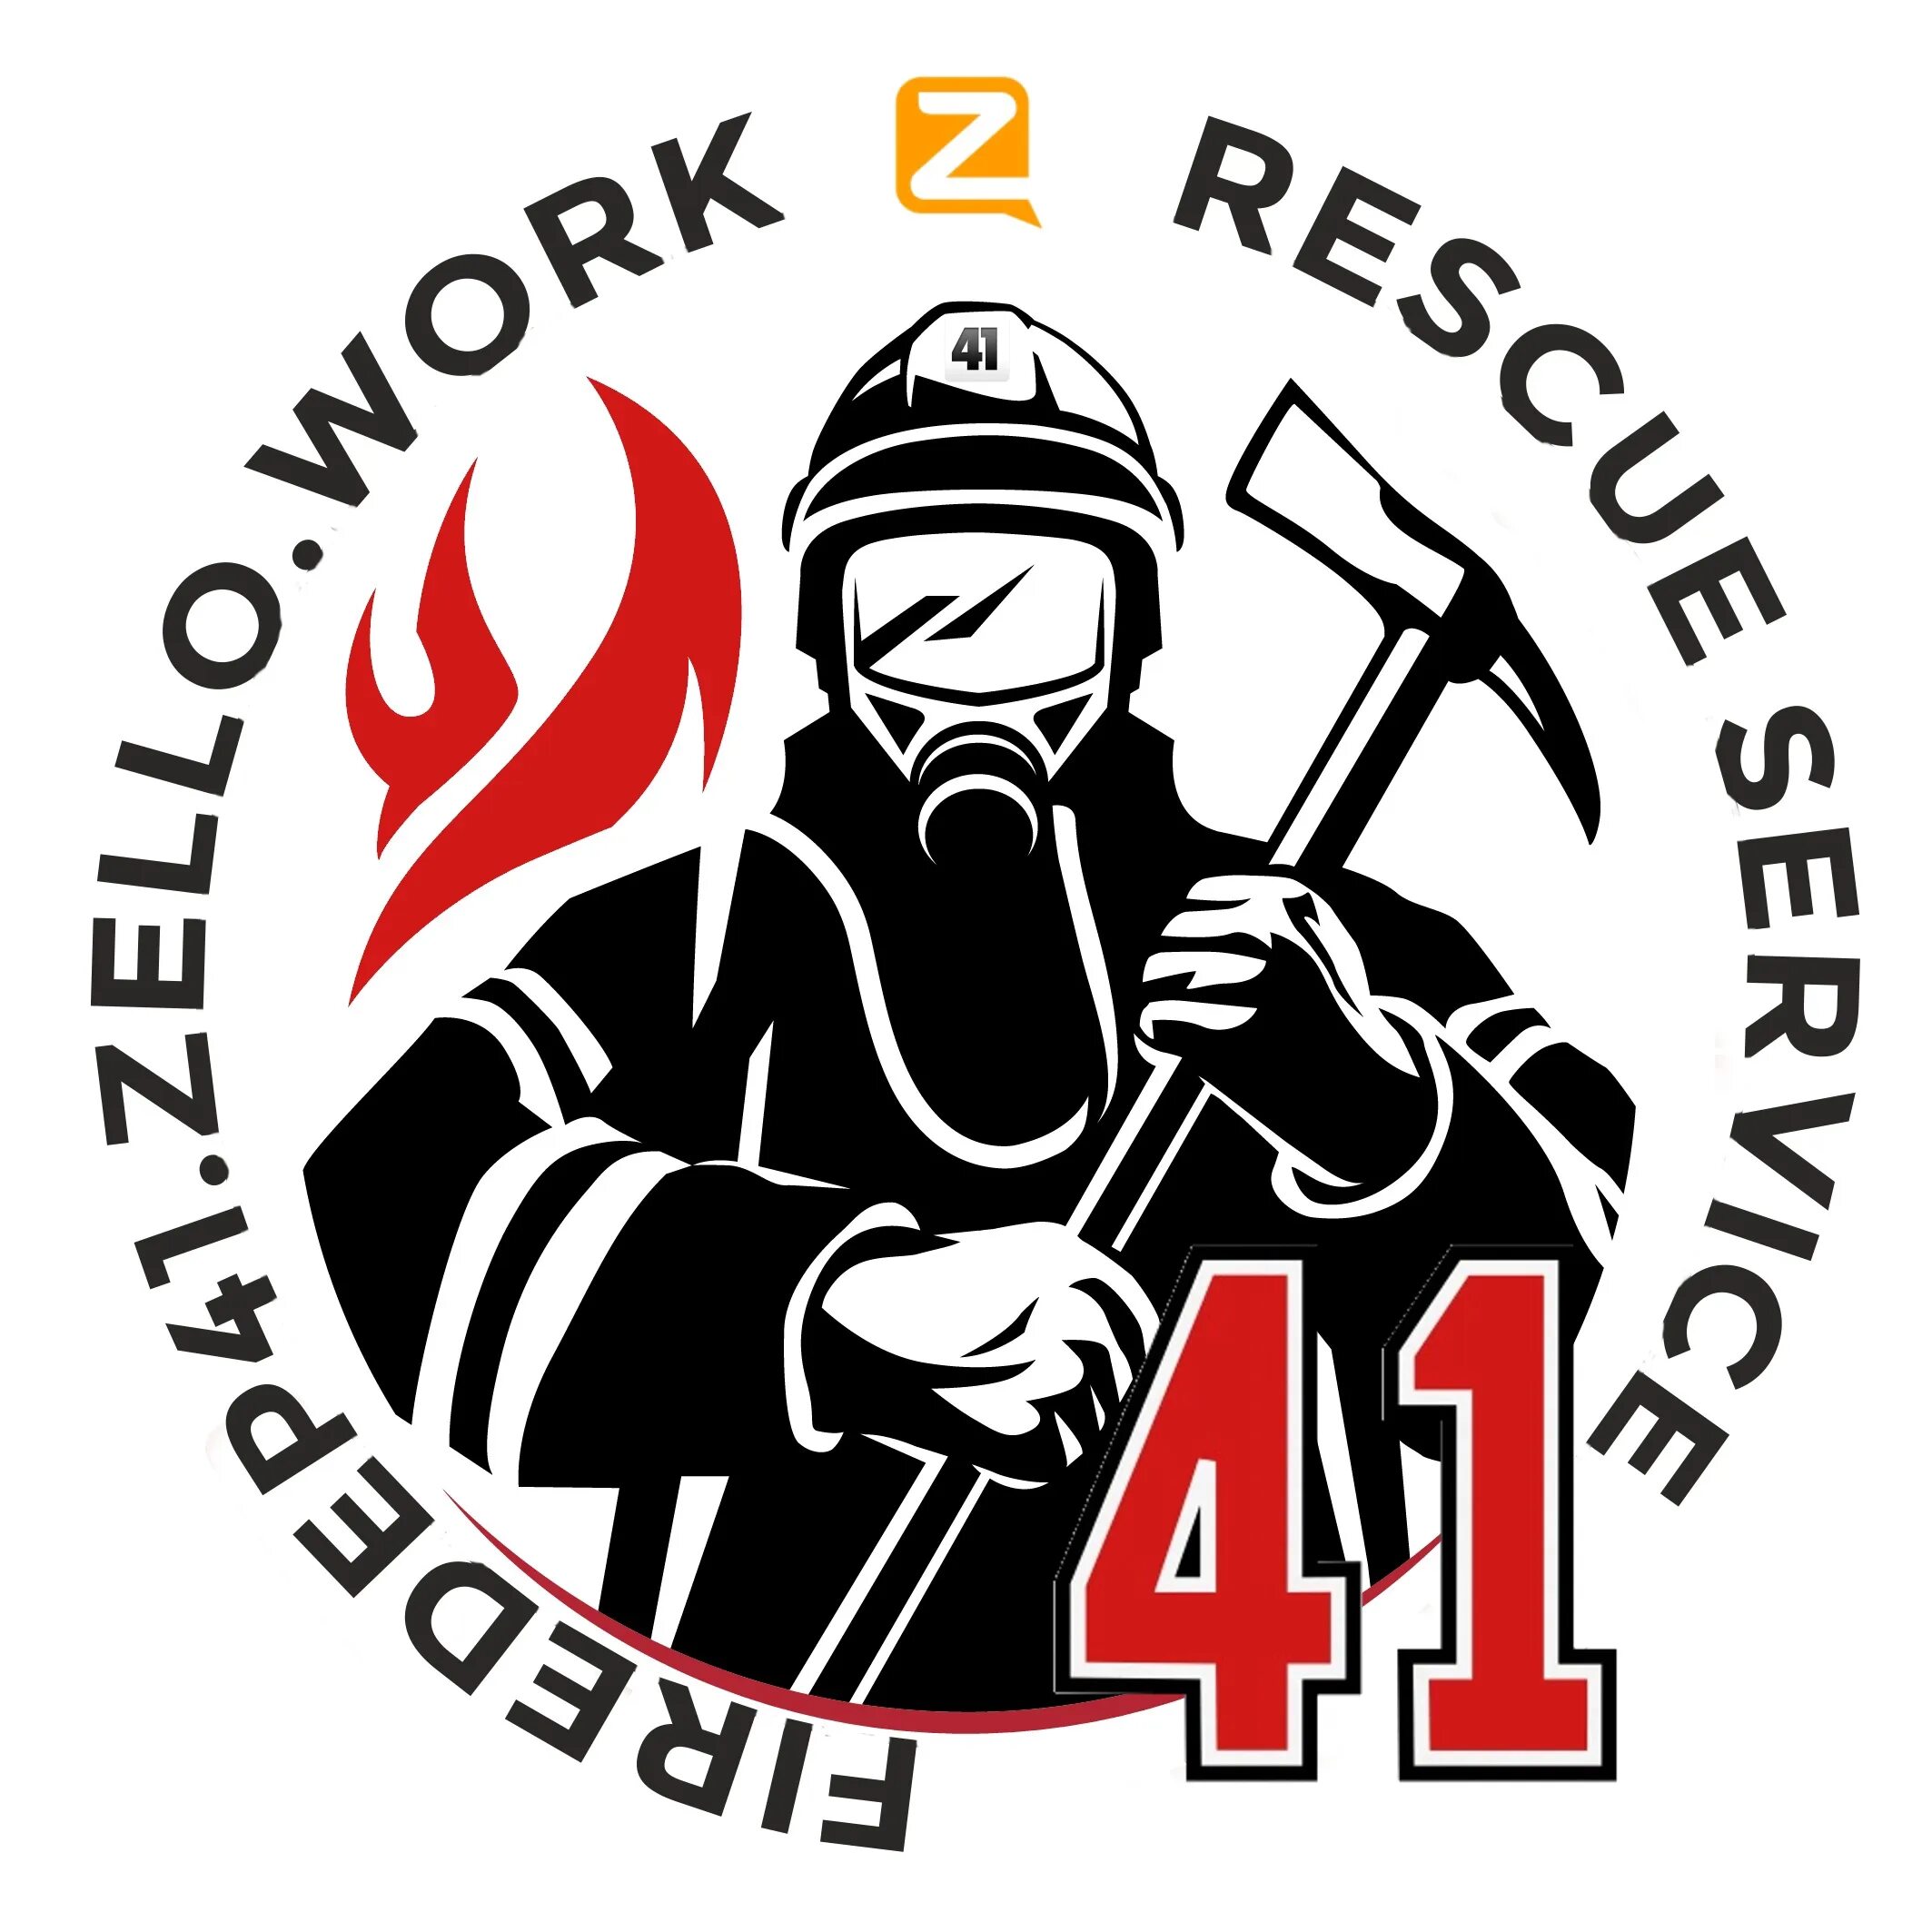 41 service. ПТЗ лого. Rescue service. Rescue service logo. Fire Rescue logo.